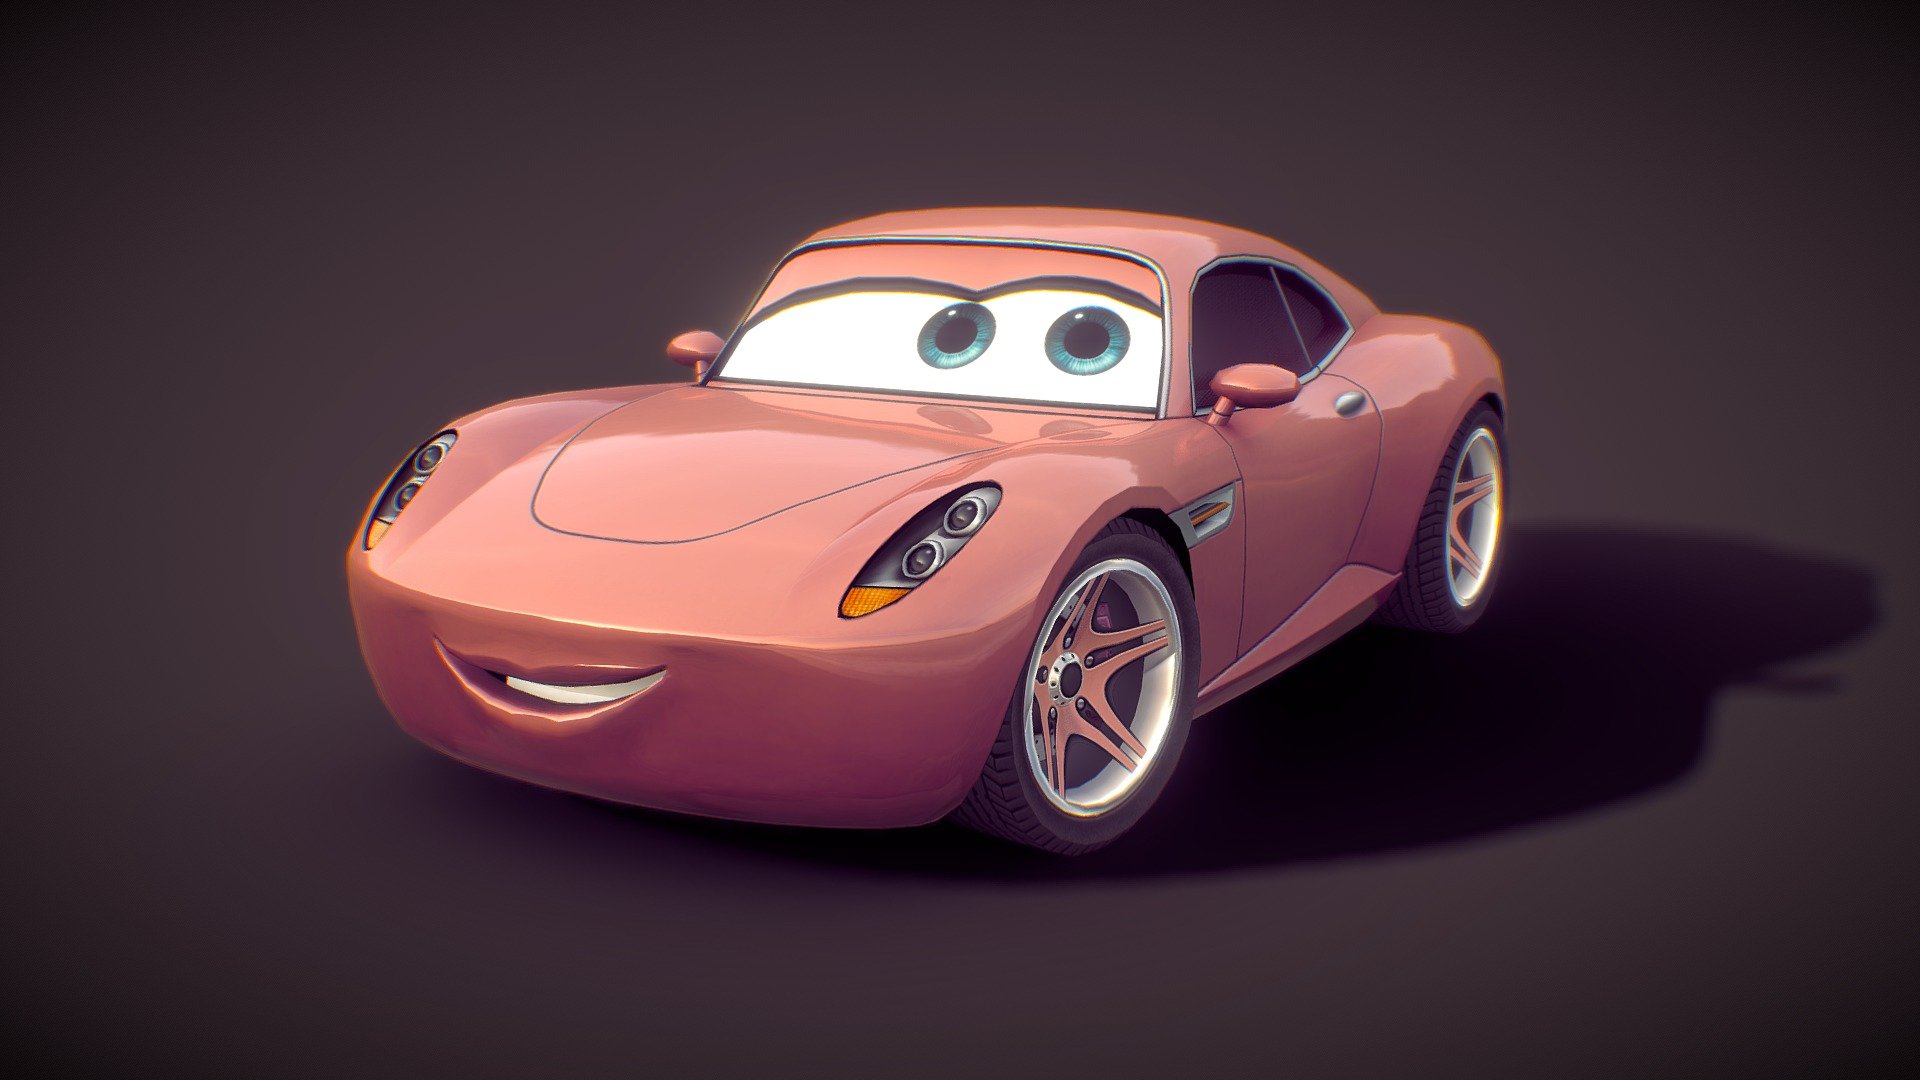 Pixar Cars: Candice from Cars Race-O-Rama